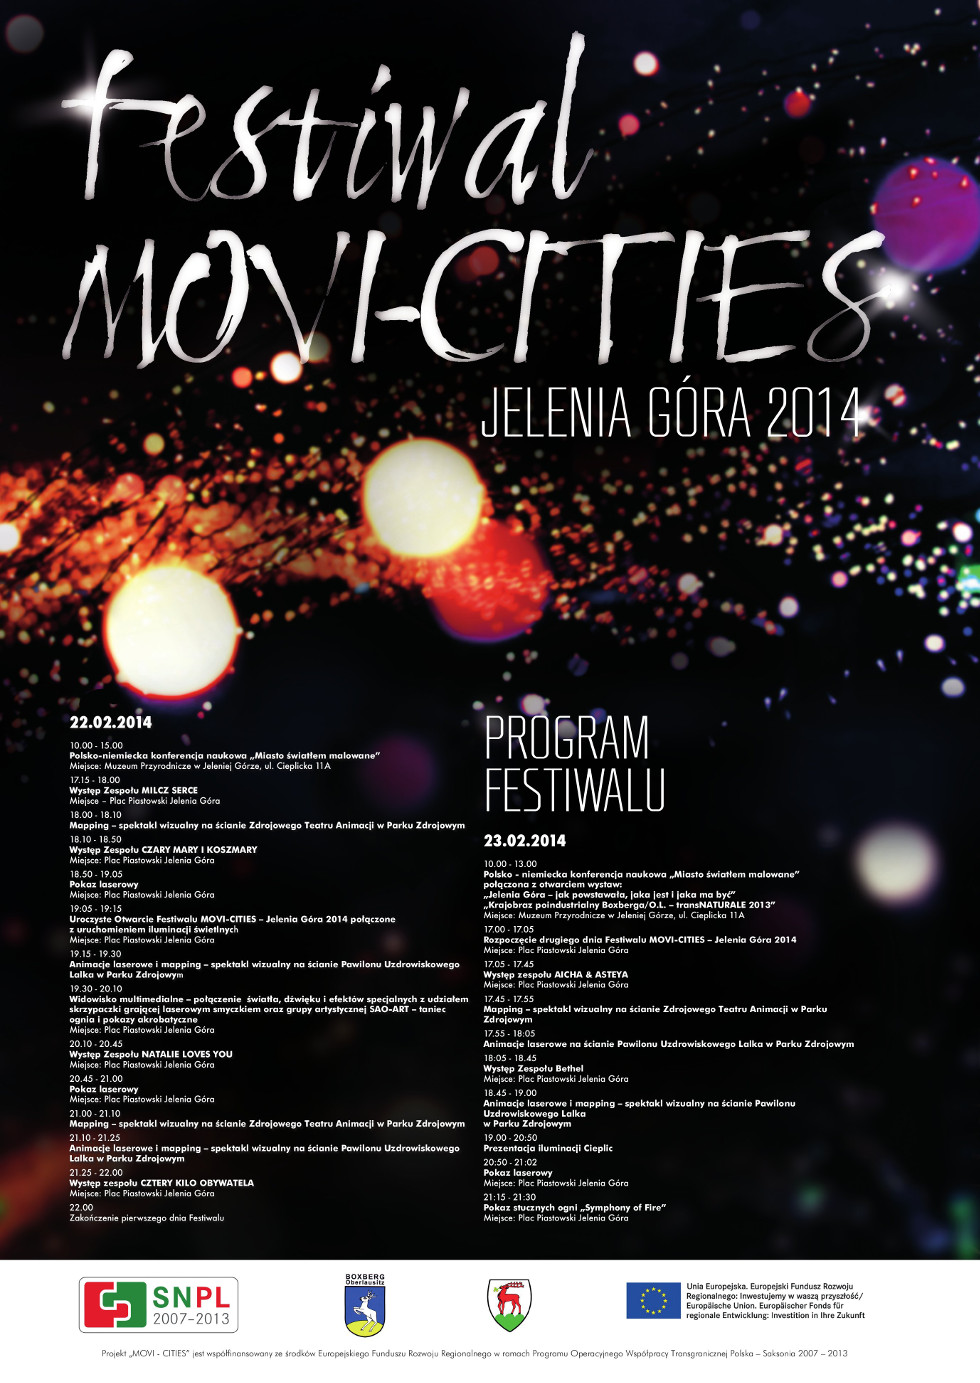 Plakat festiwalu Movi-Cities Jelenia Góra 2014